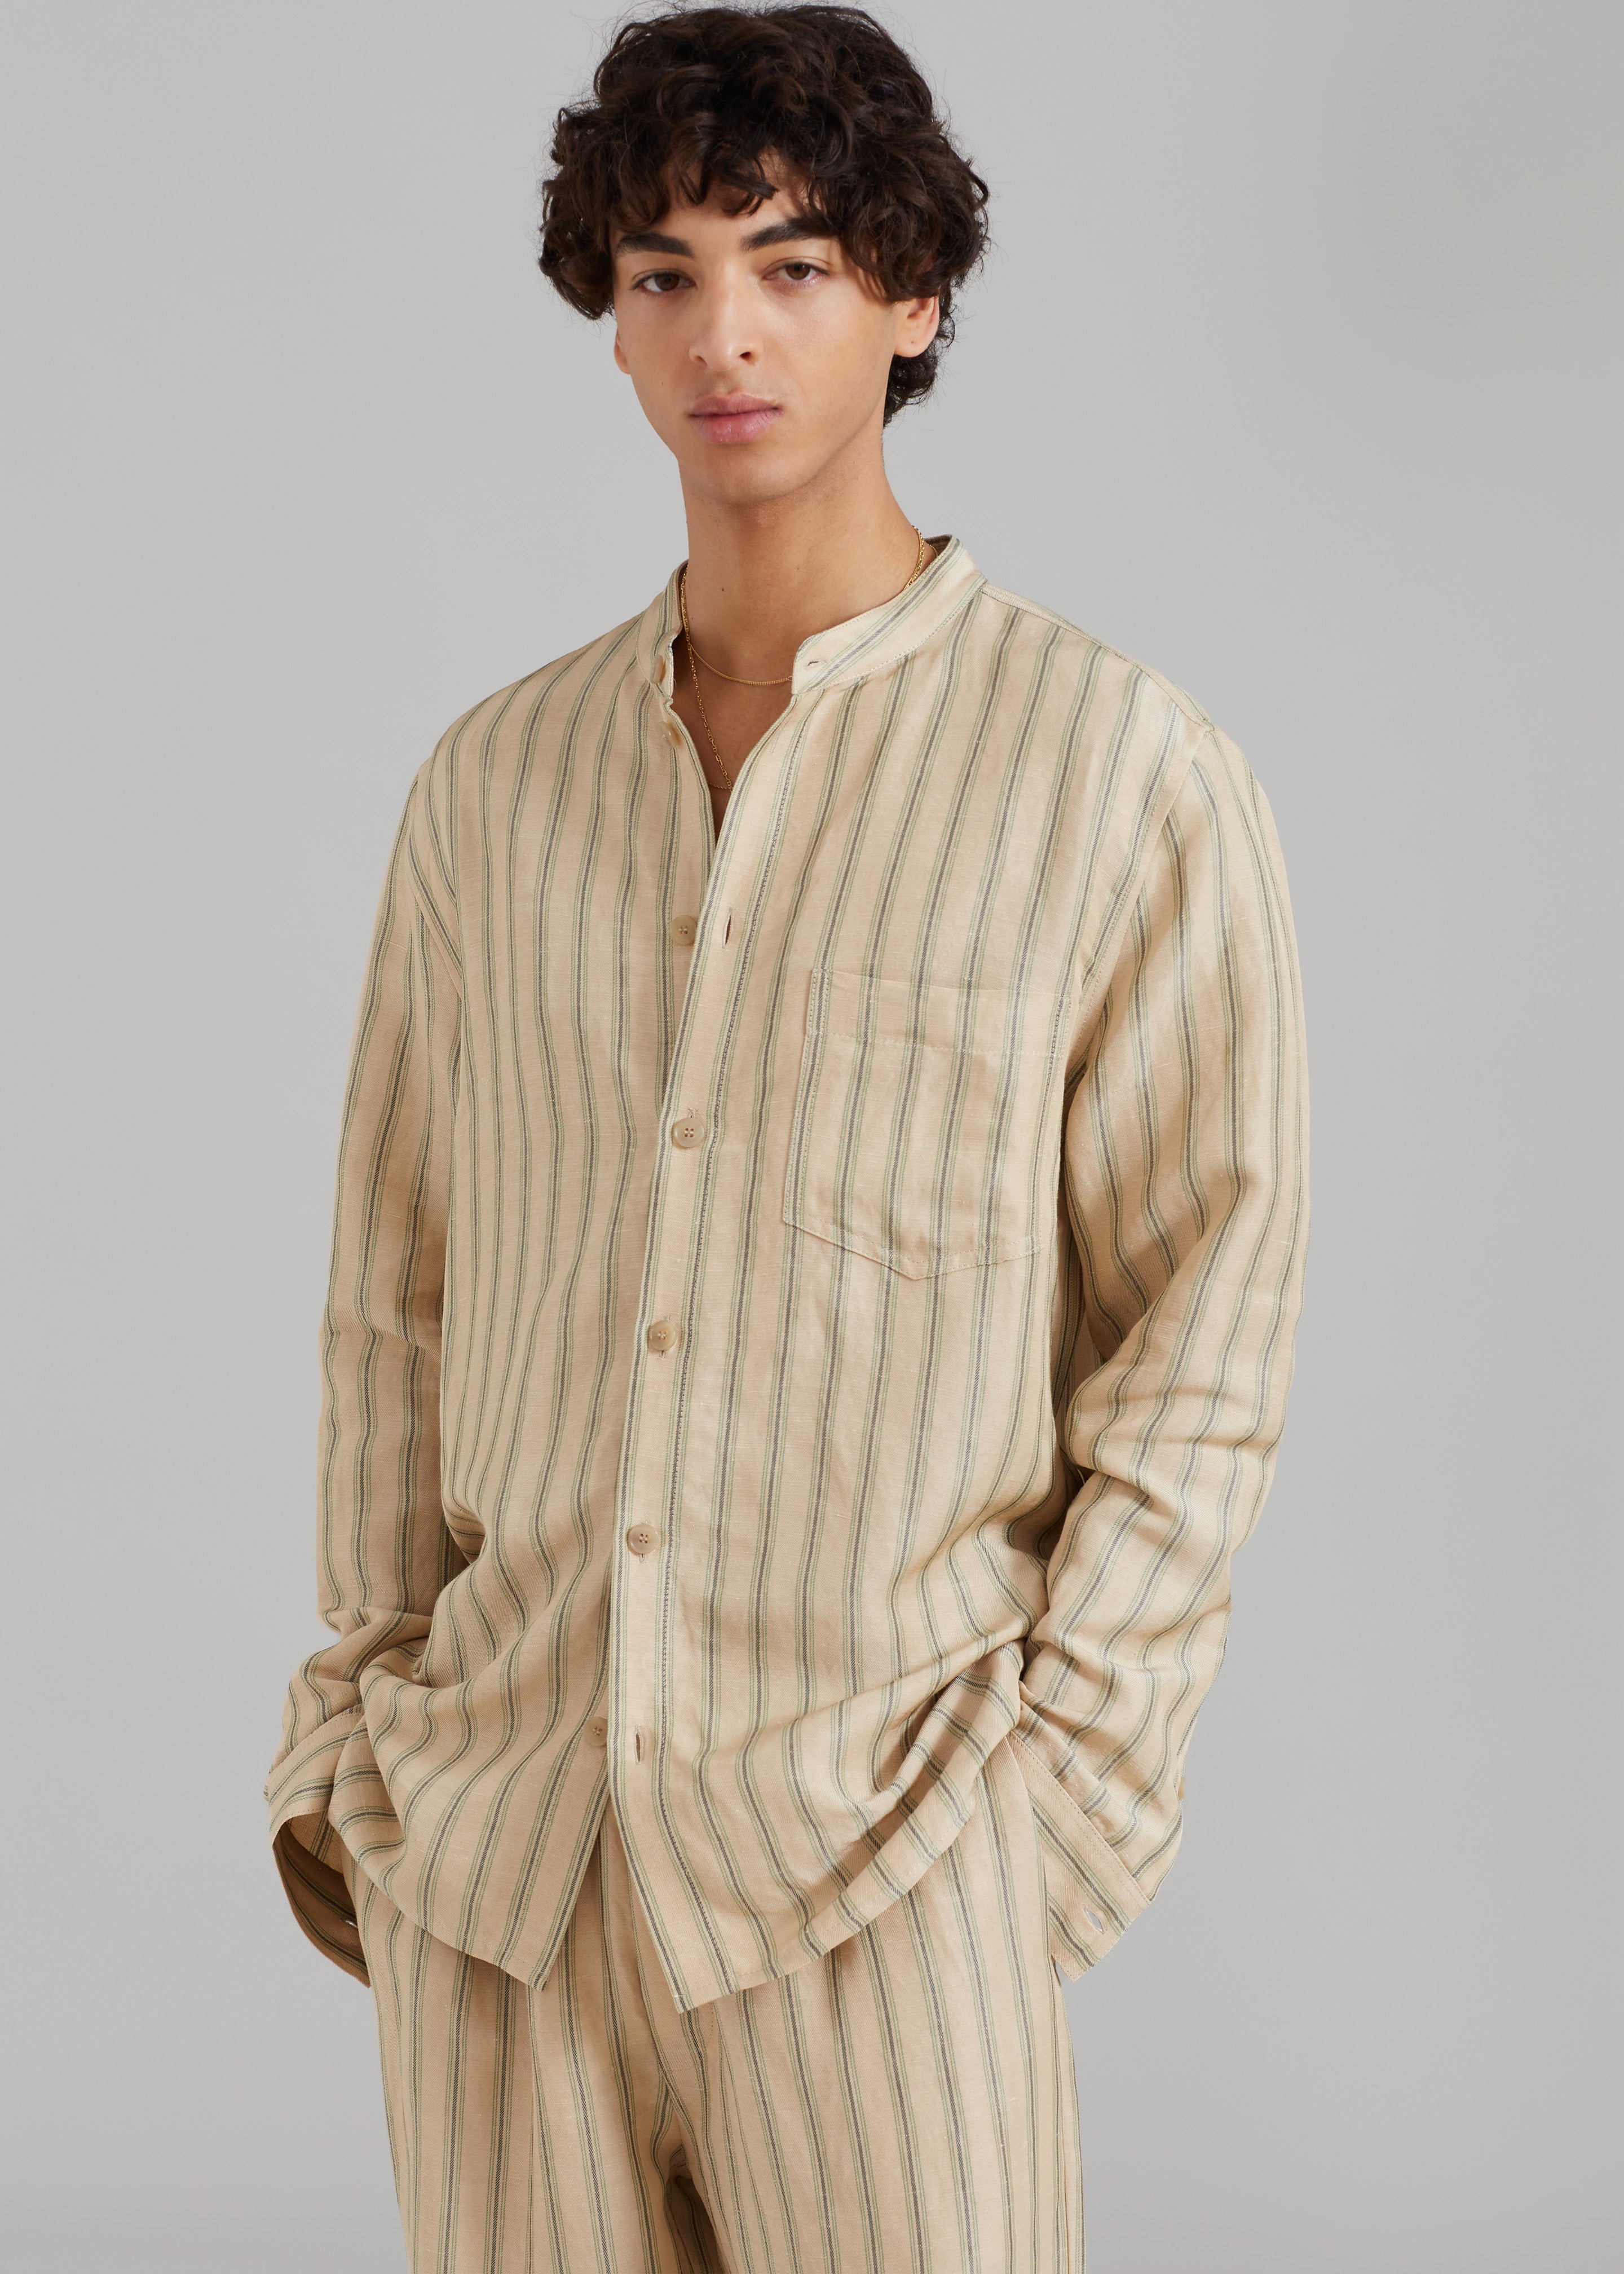 Róhe Resort Striped Shirt - Deckchair Stripe - 1